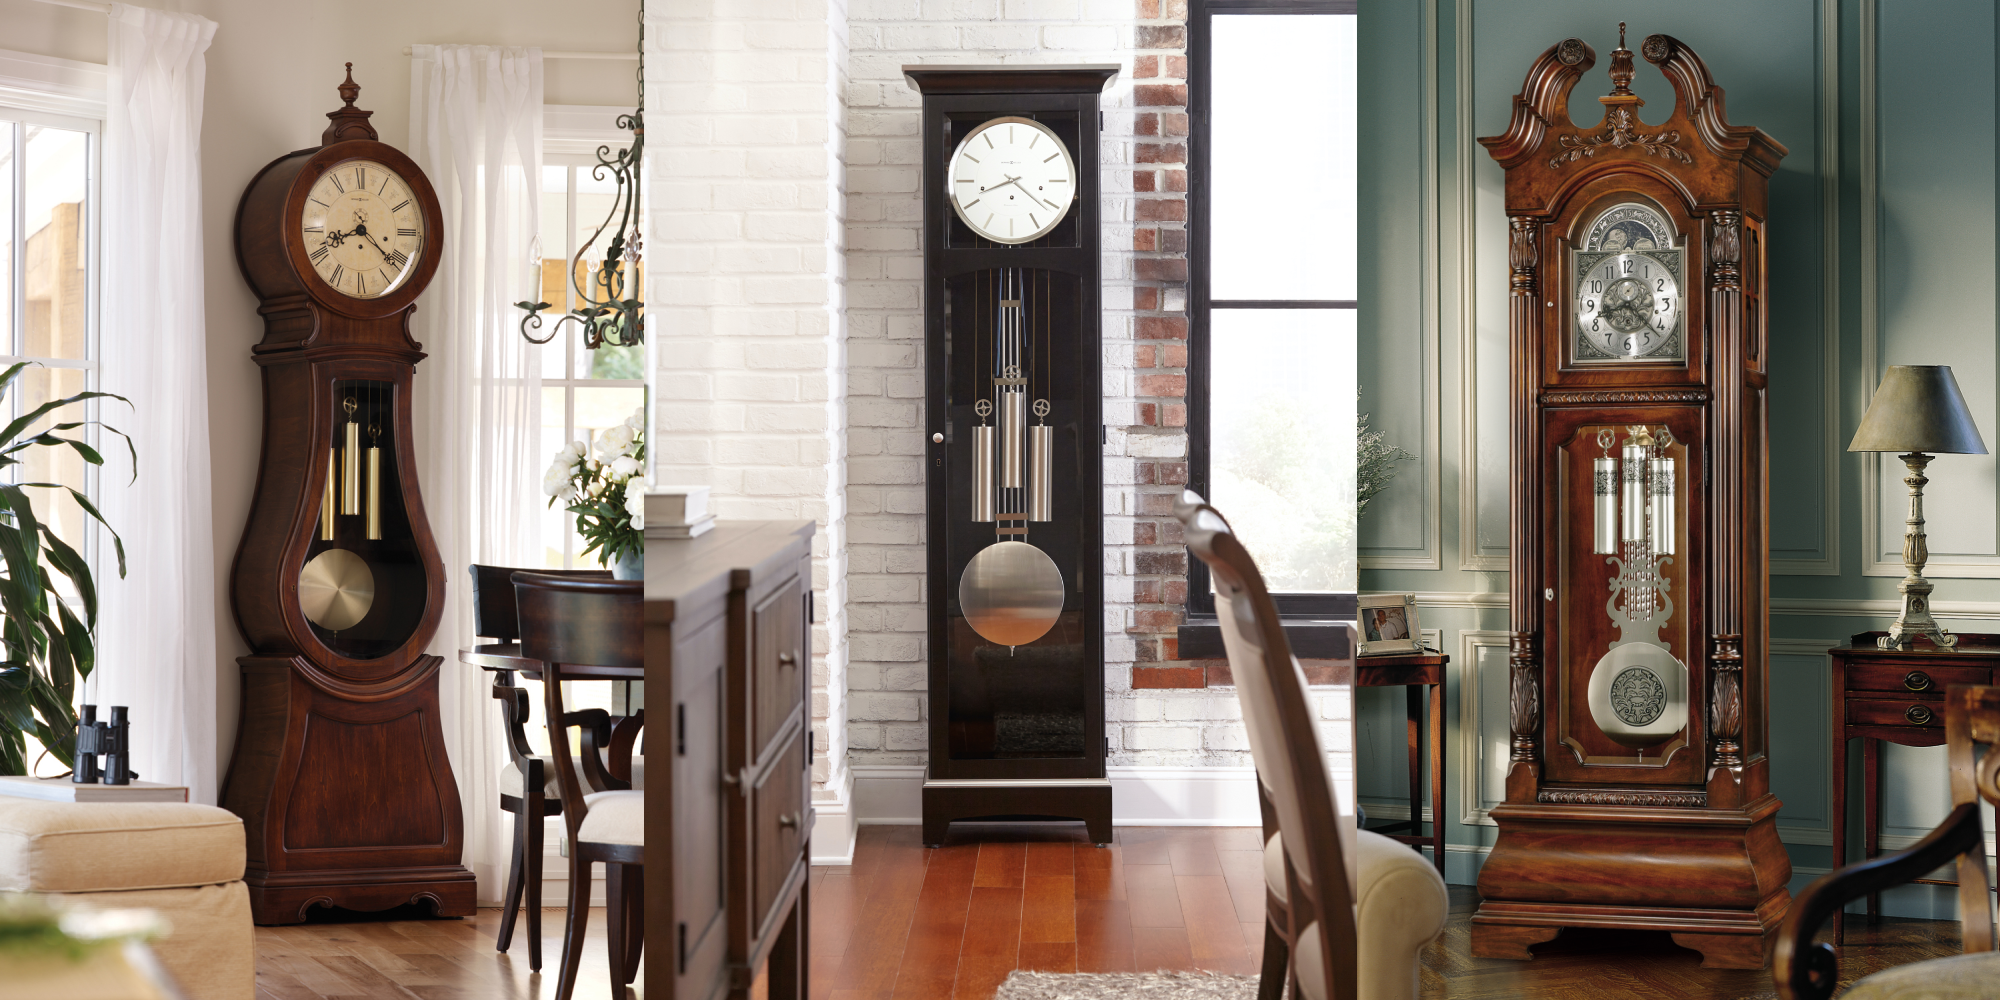 How to move a grandfather clock - Premier Clocks